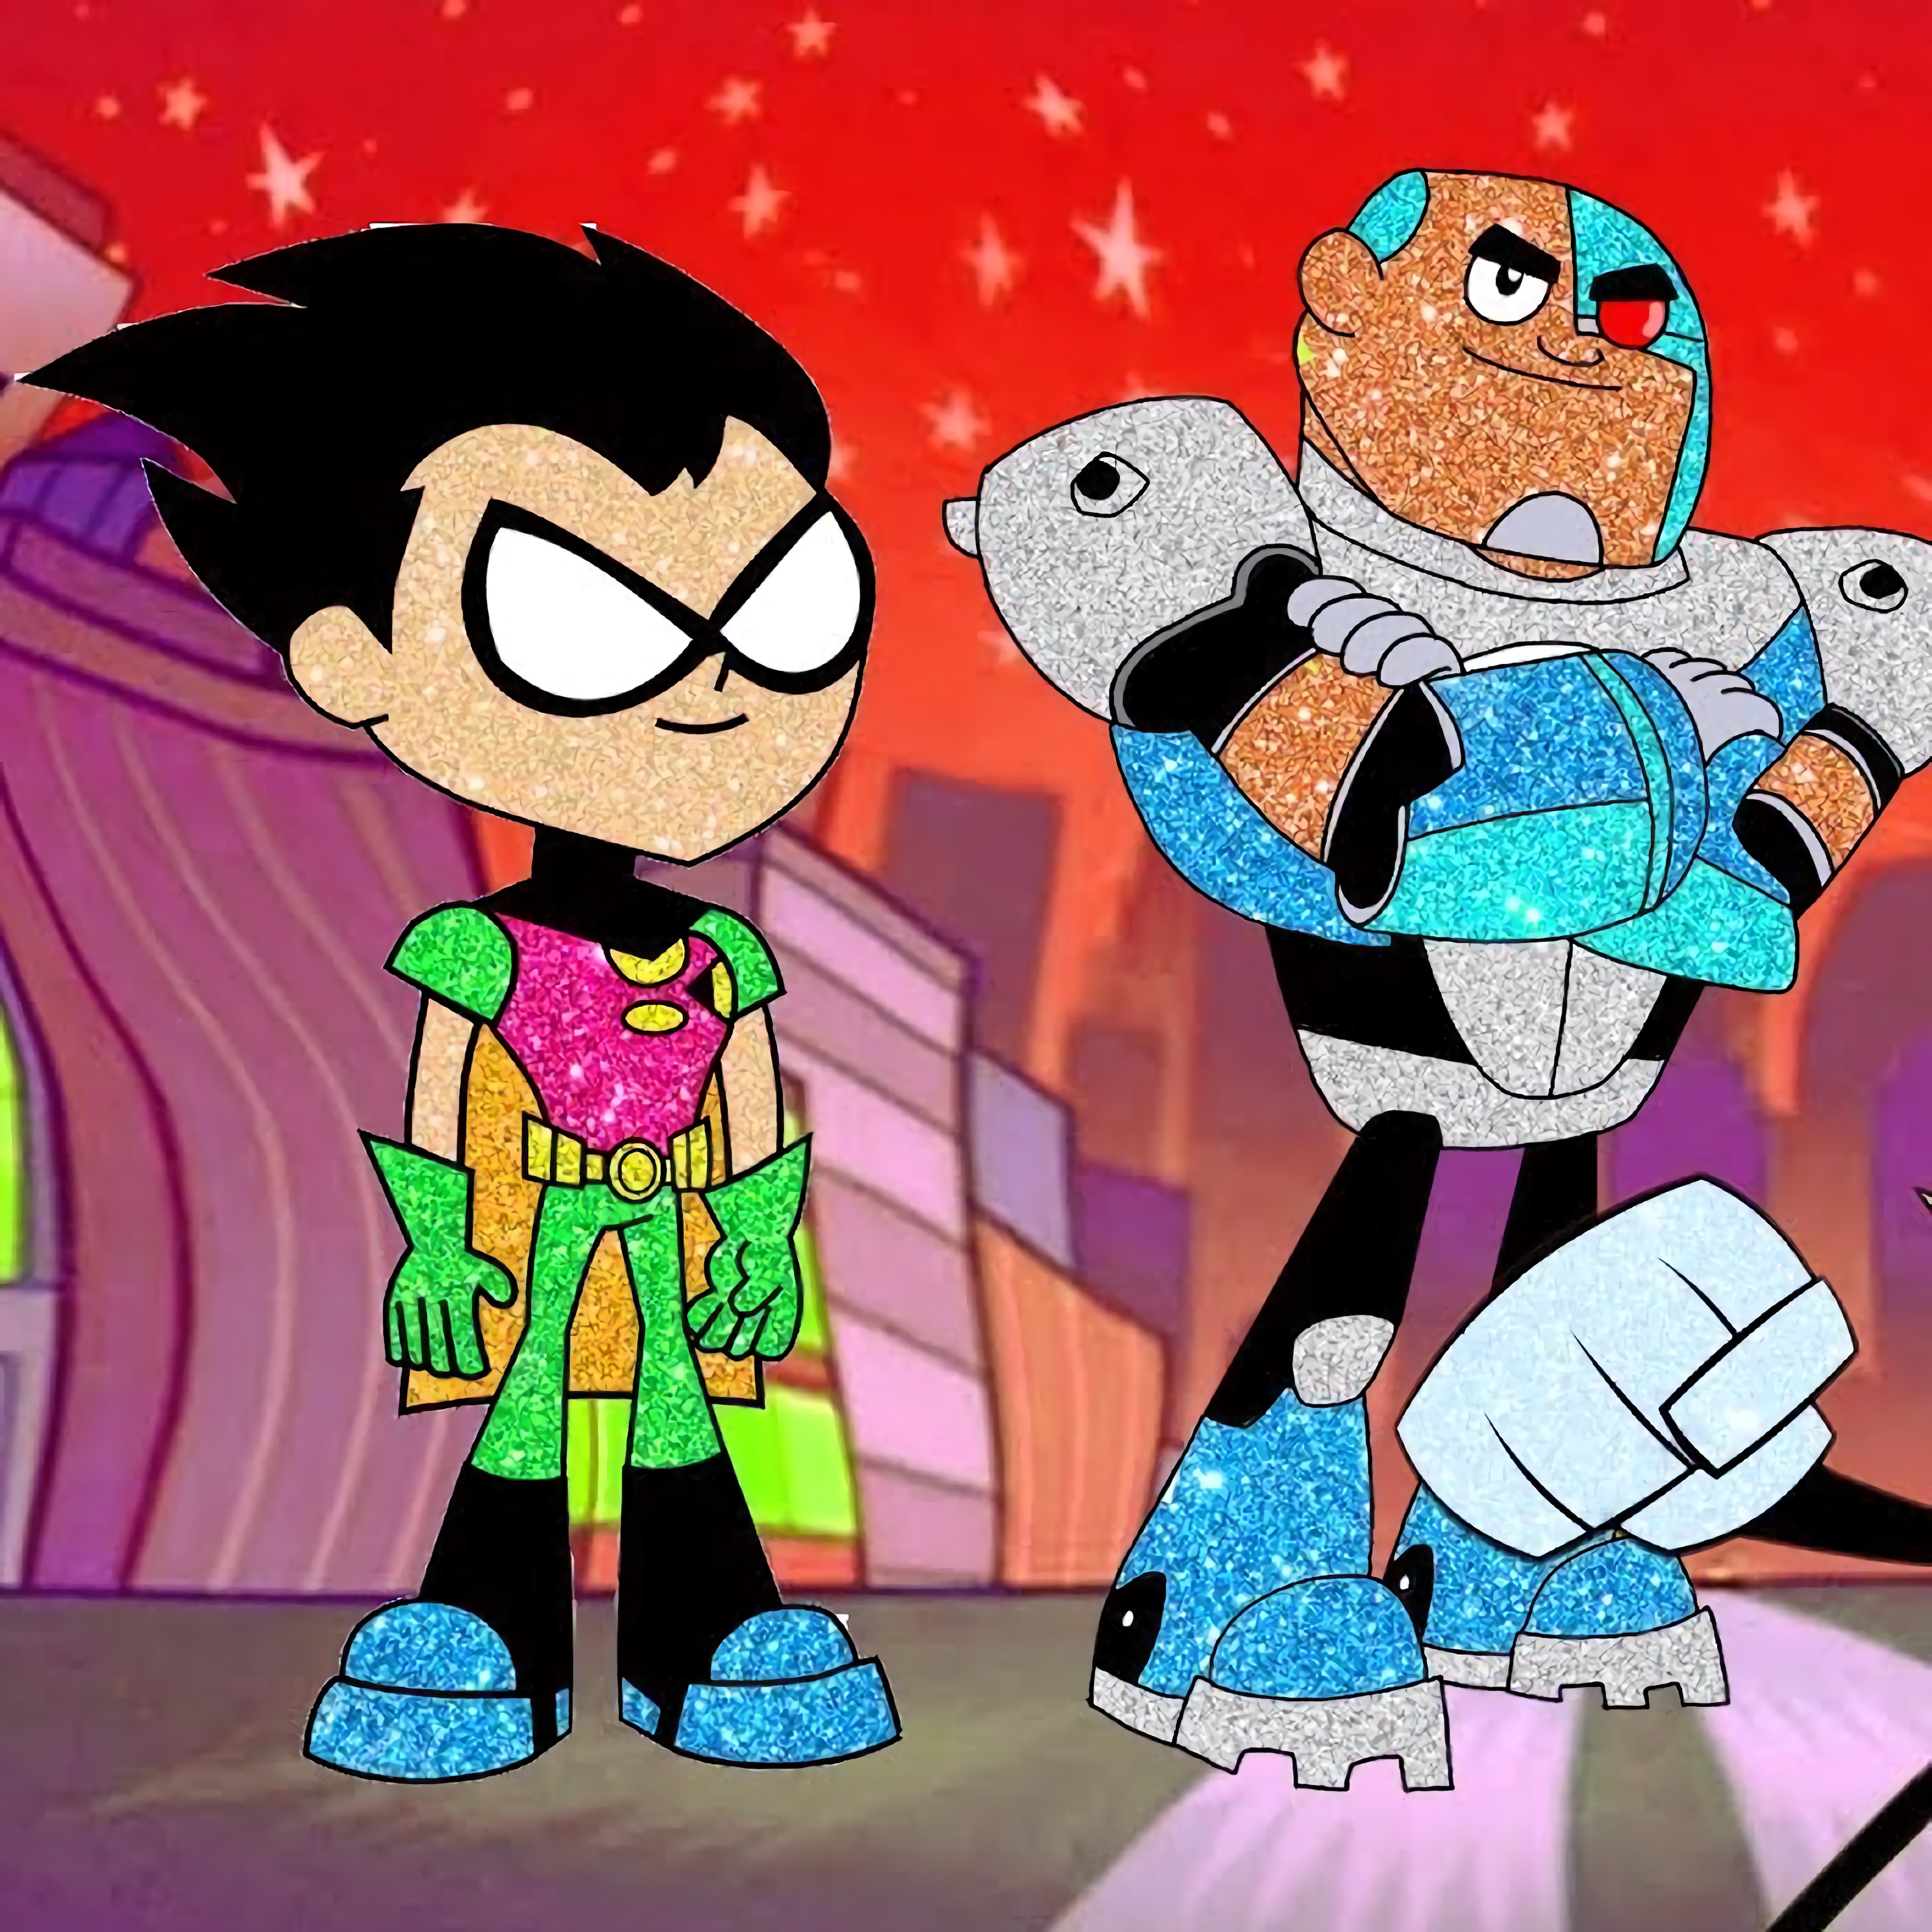 Slash of Justice - Teen Titans Go!